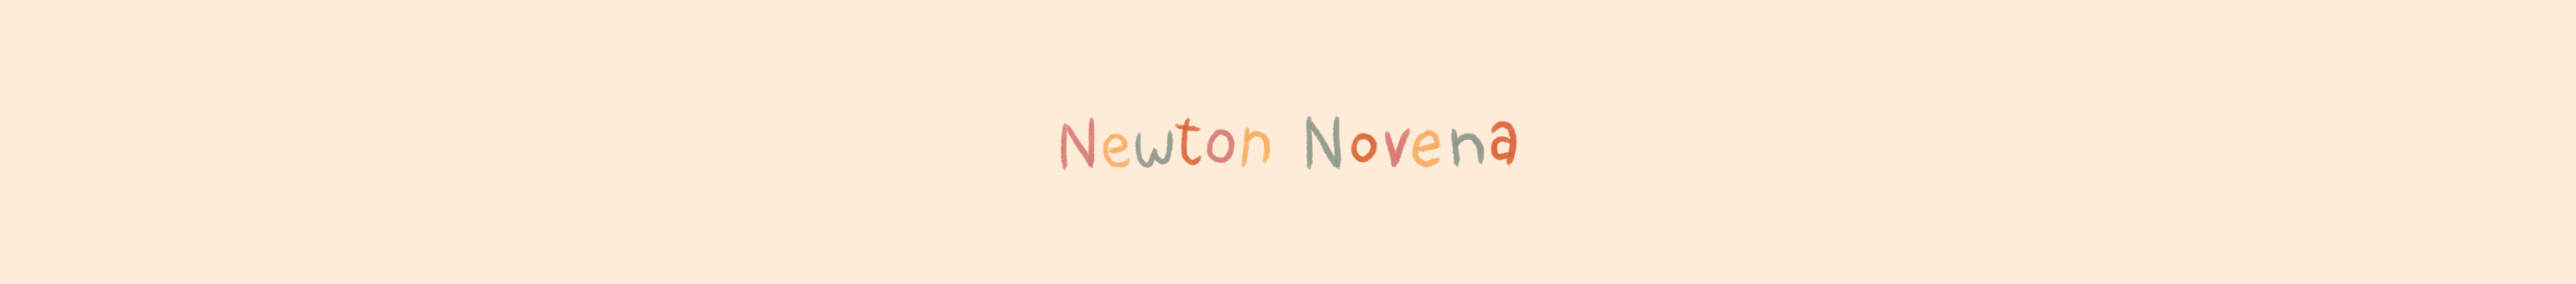 Баннер профиля Newton Novena